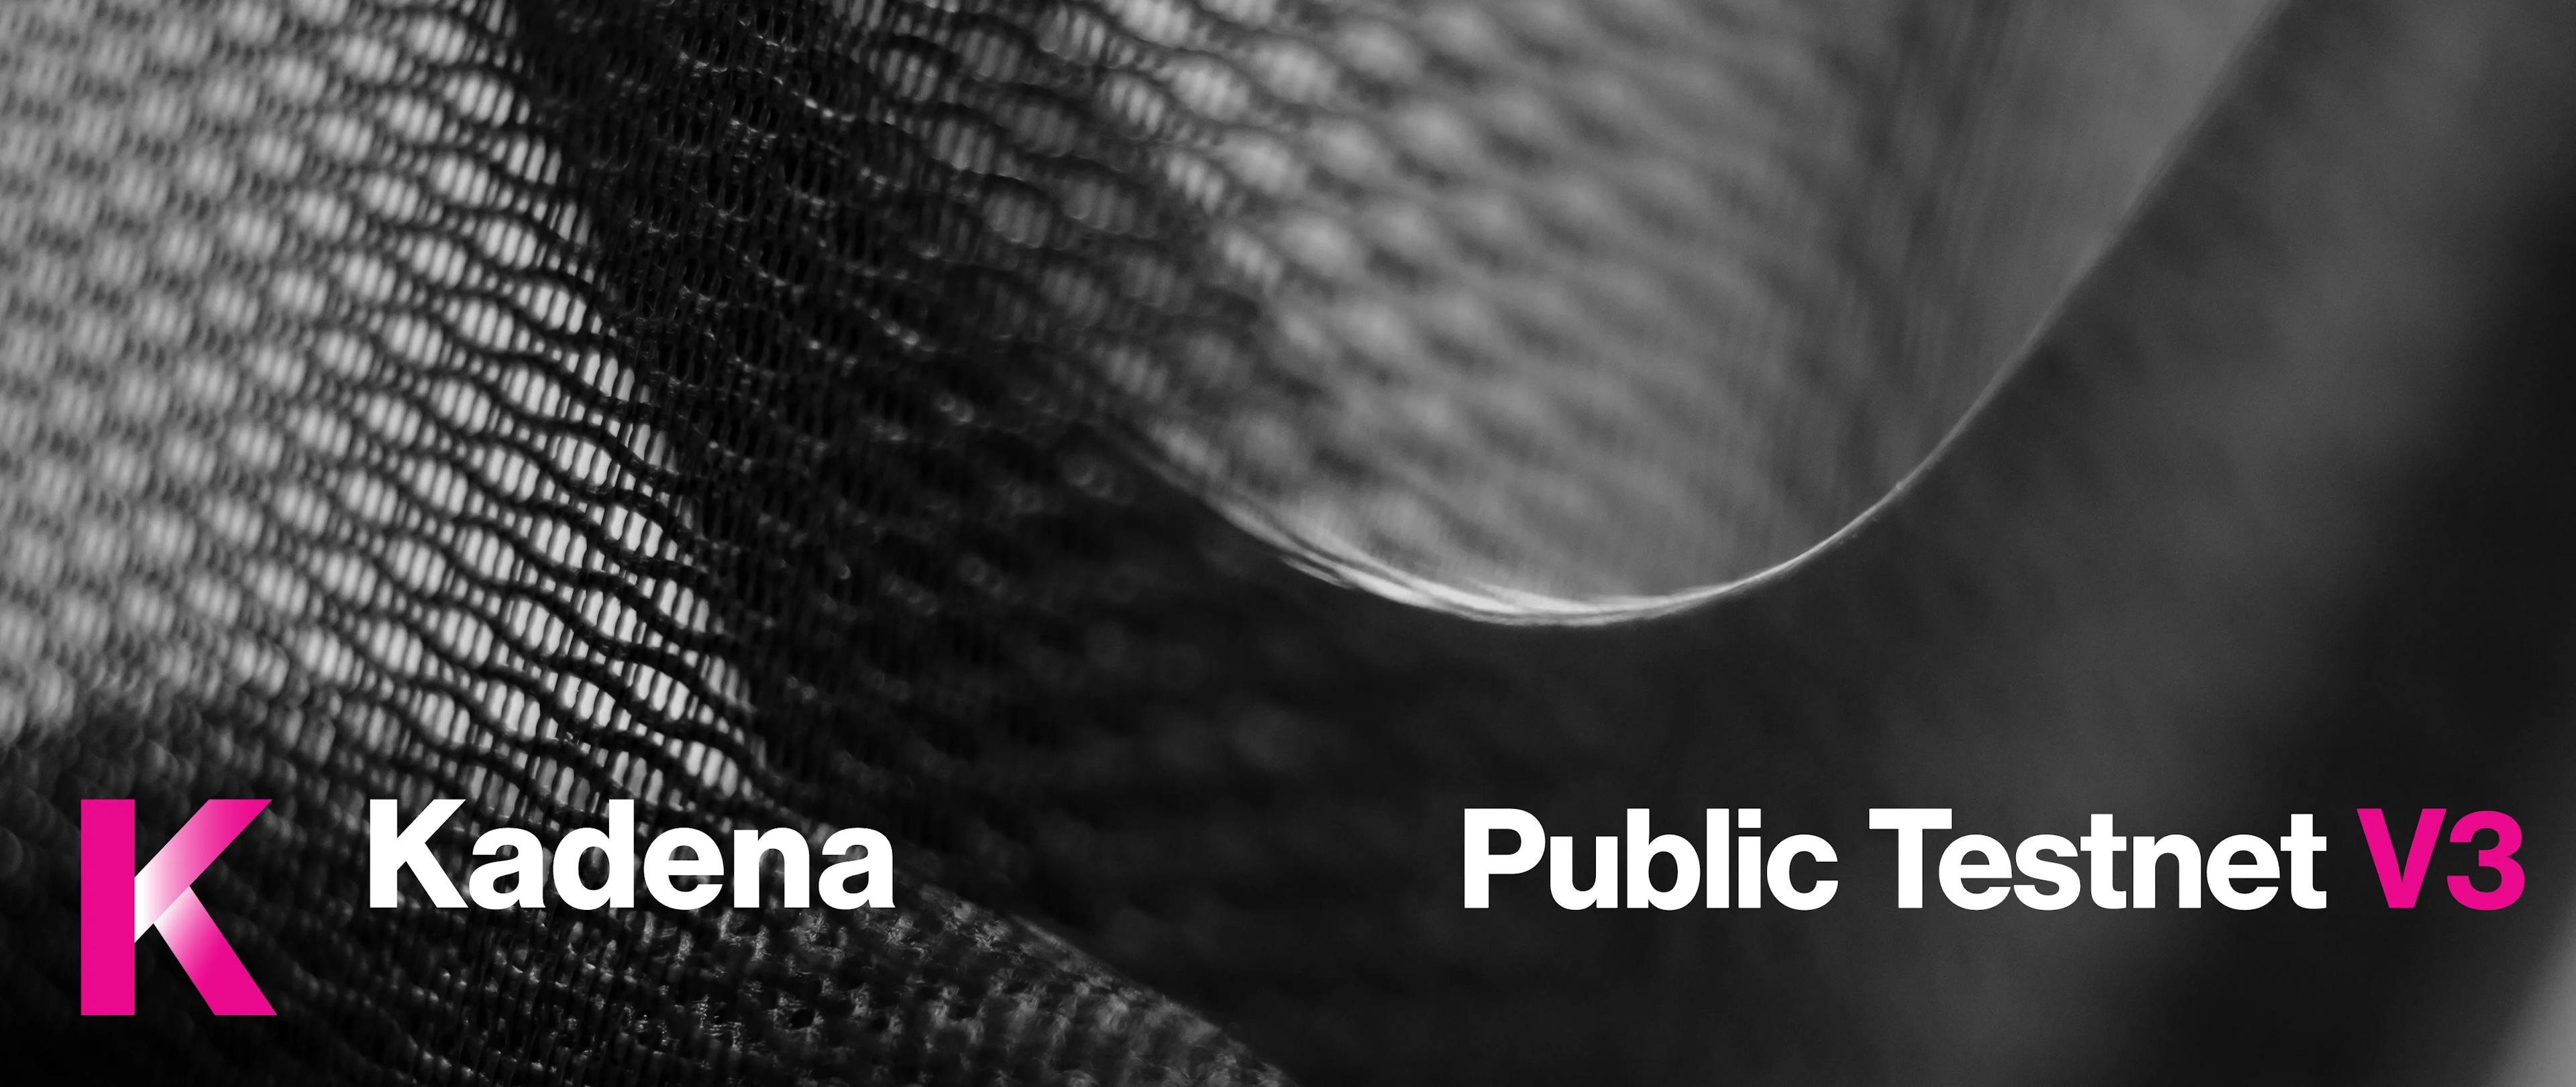 Kadena Public Blockchain Releases Fully Public Testnet (v3), Hashing Algorithm, and Mining API